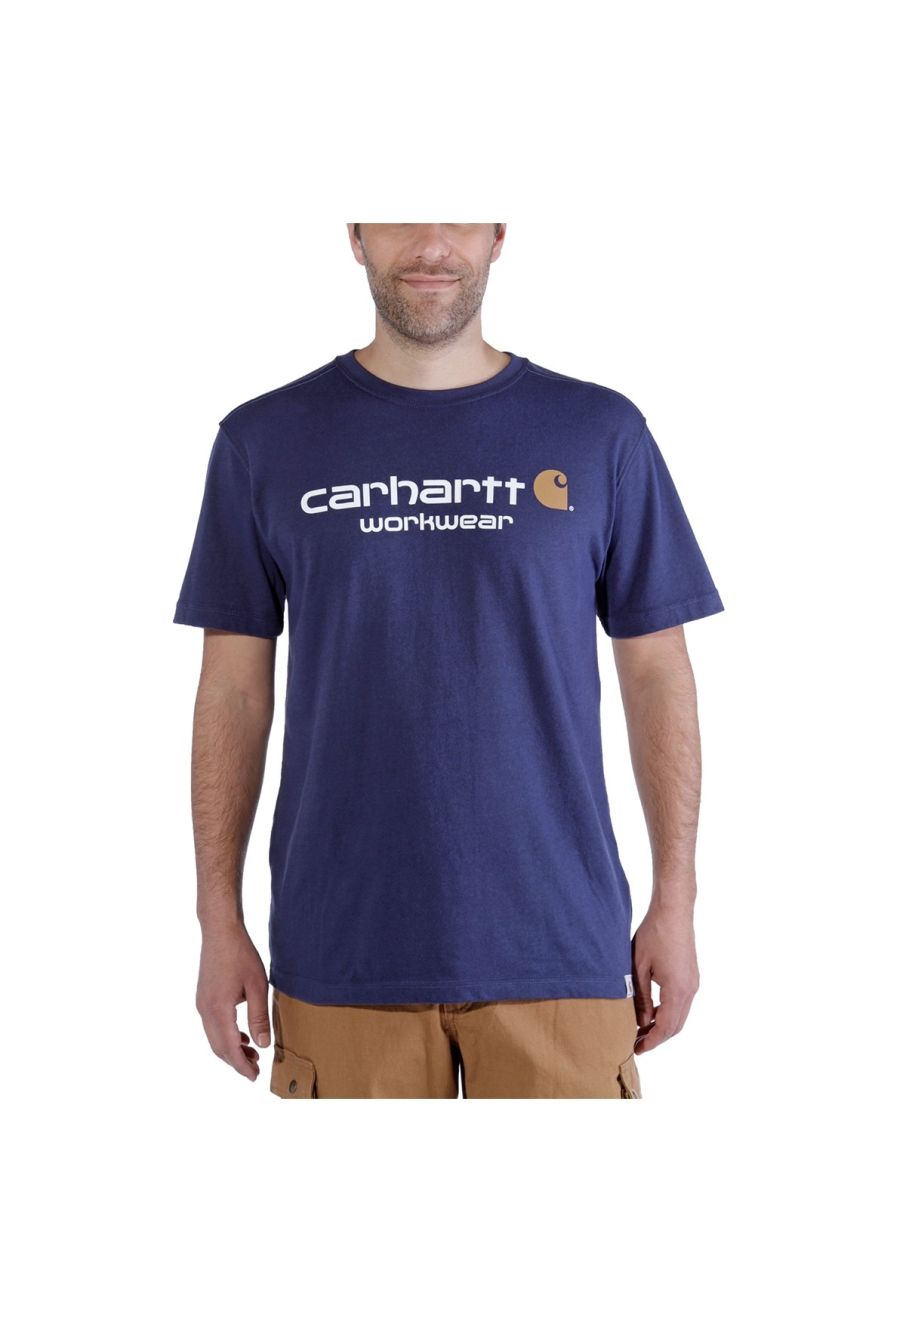 s/s Logo Carhartt T-Shirt 101214 Core - White